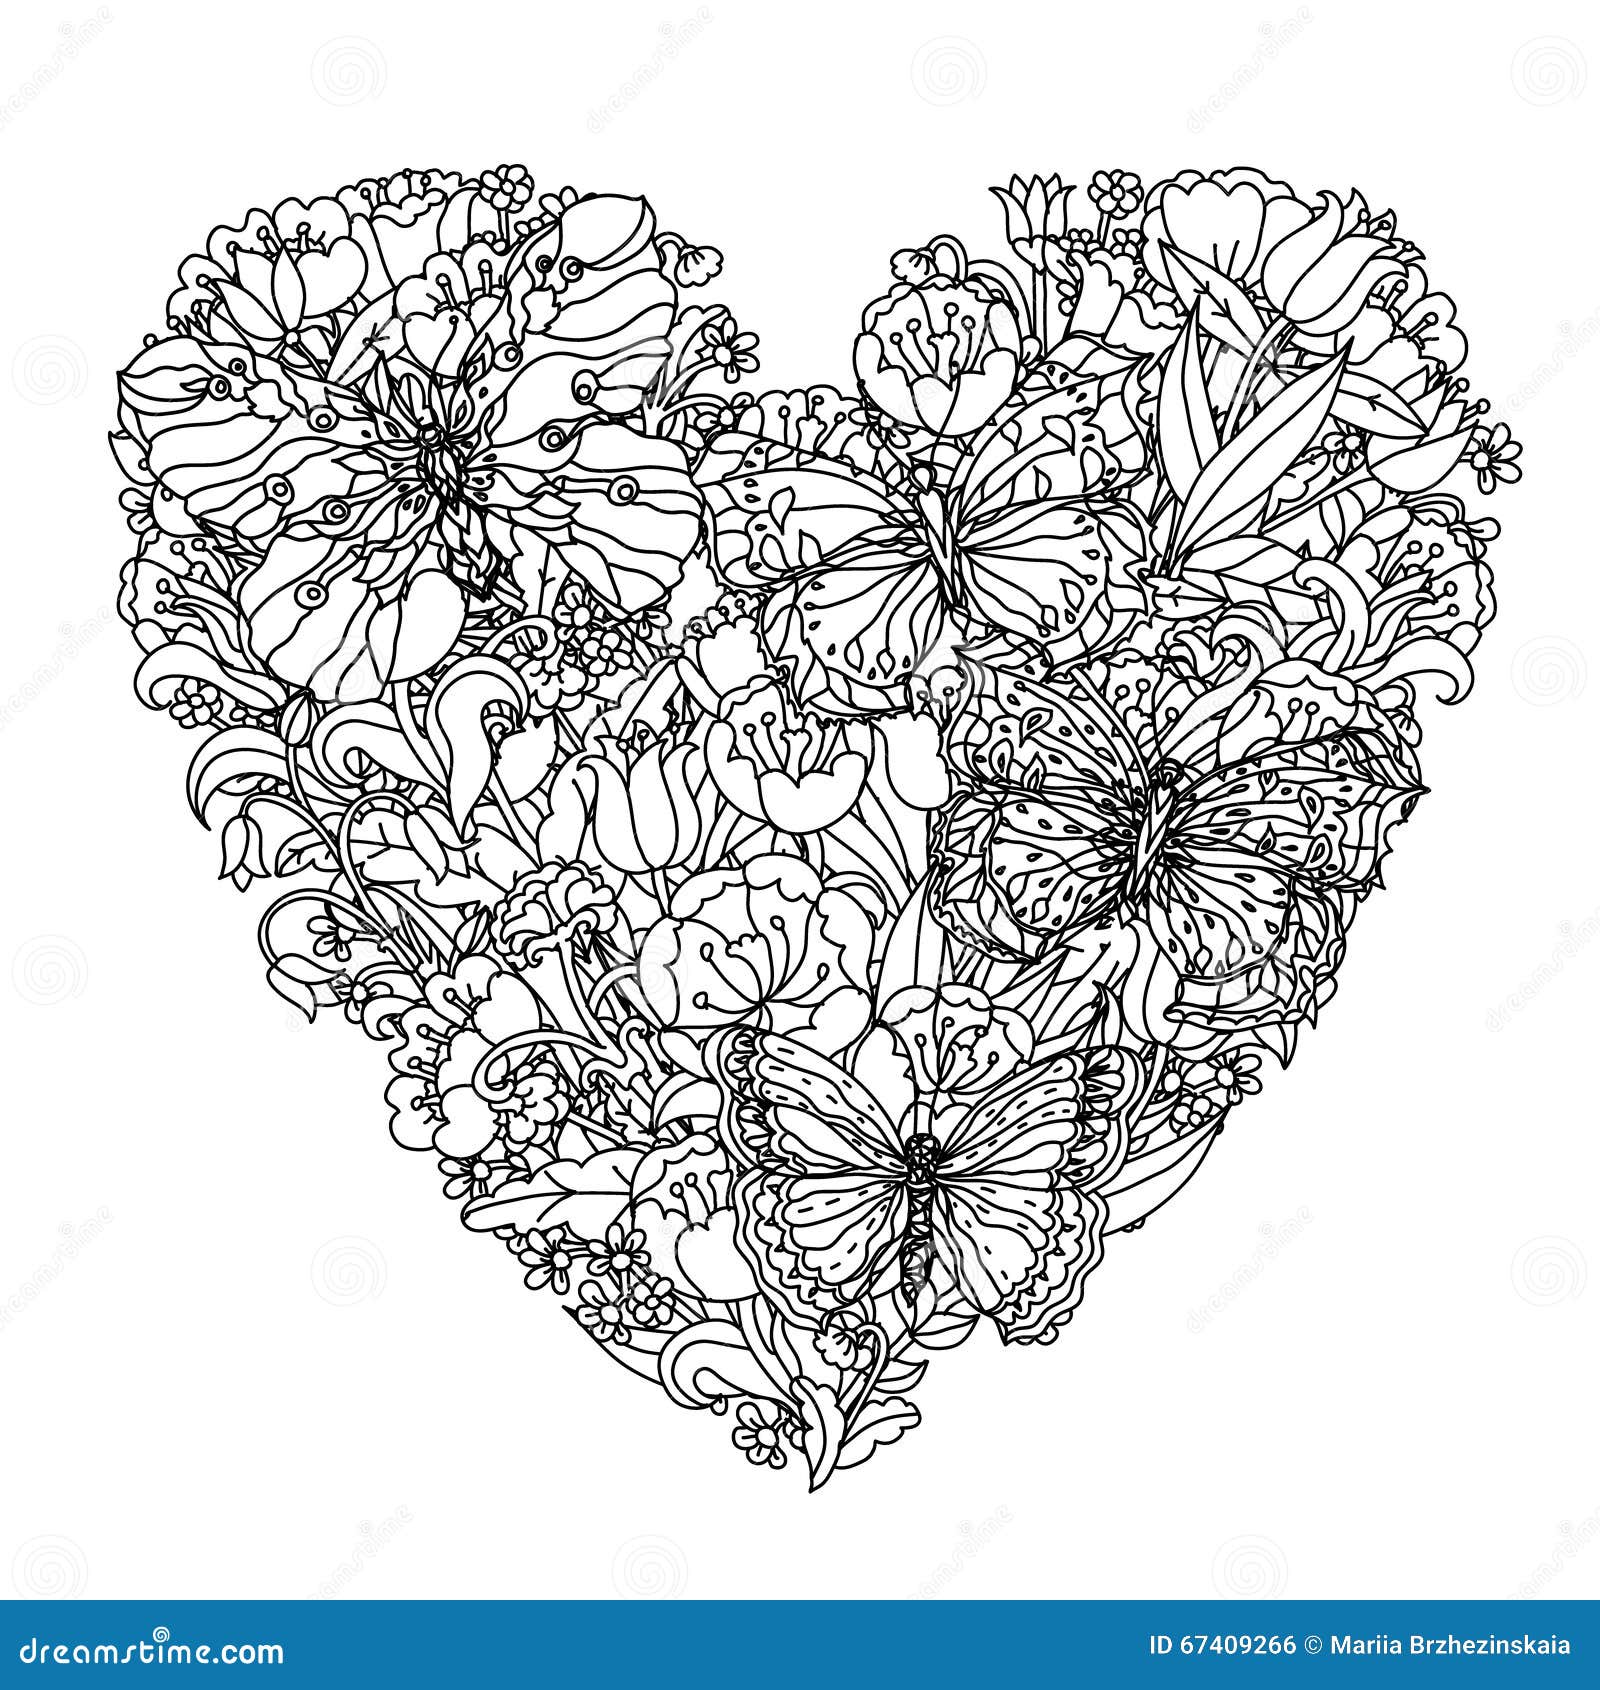 Tulips and butterflies stock vector. Illustration of invitation - 67409266